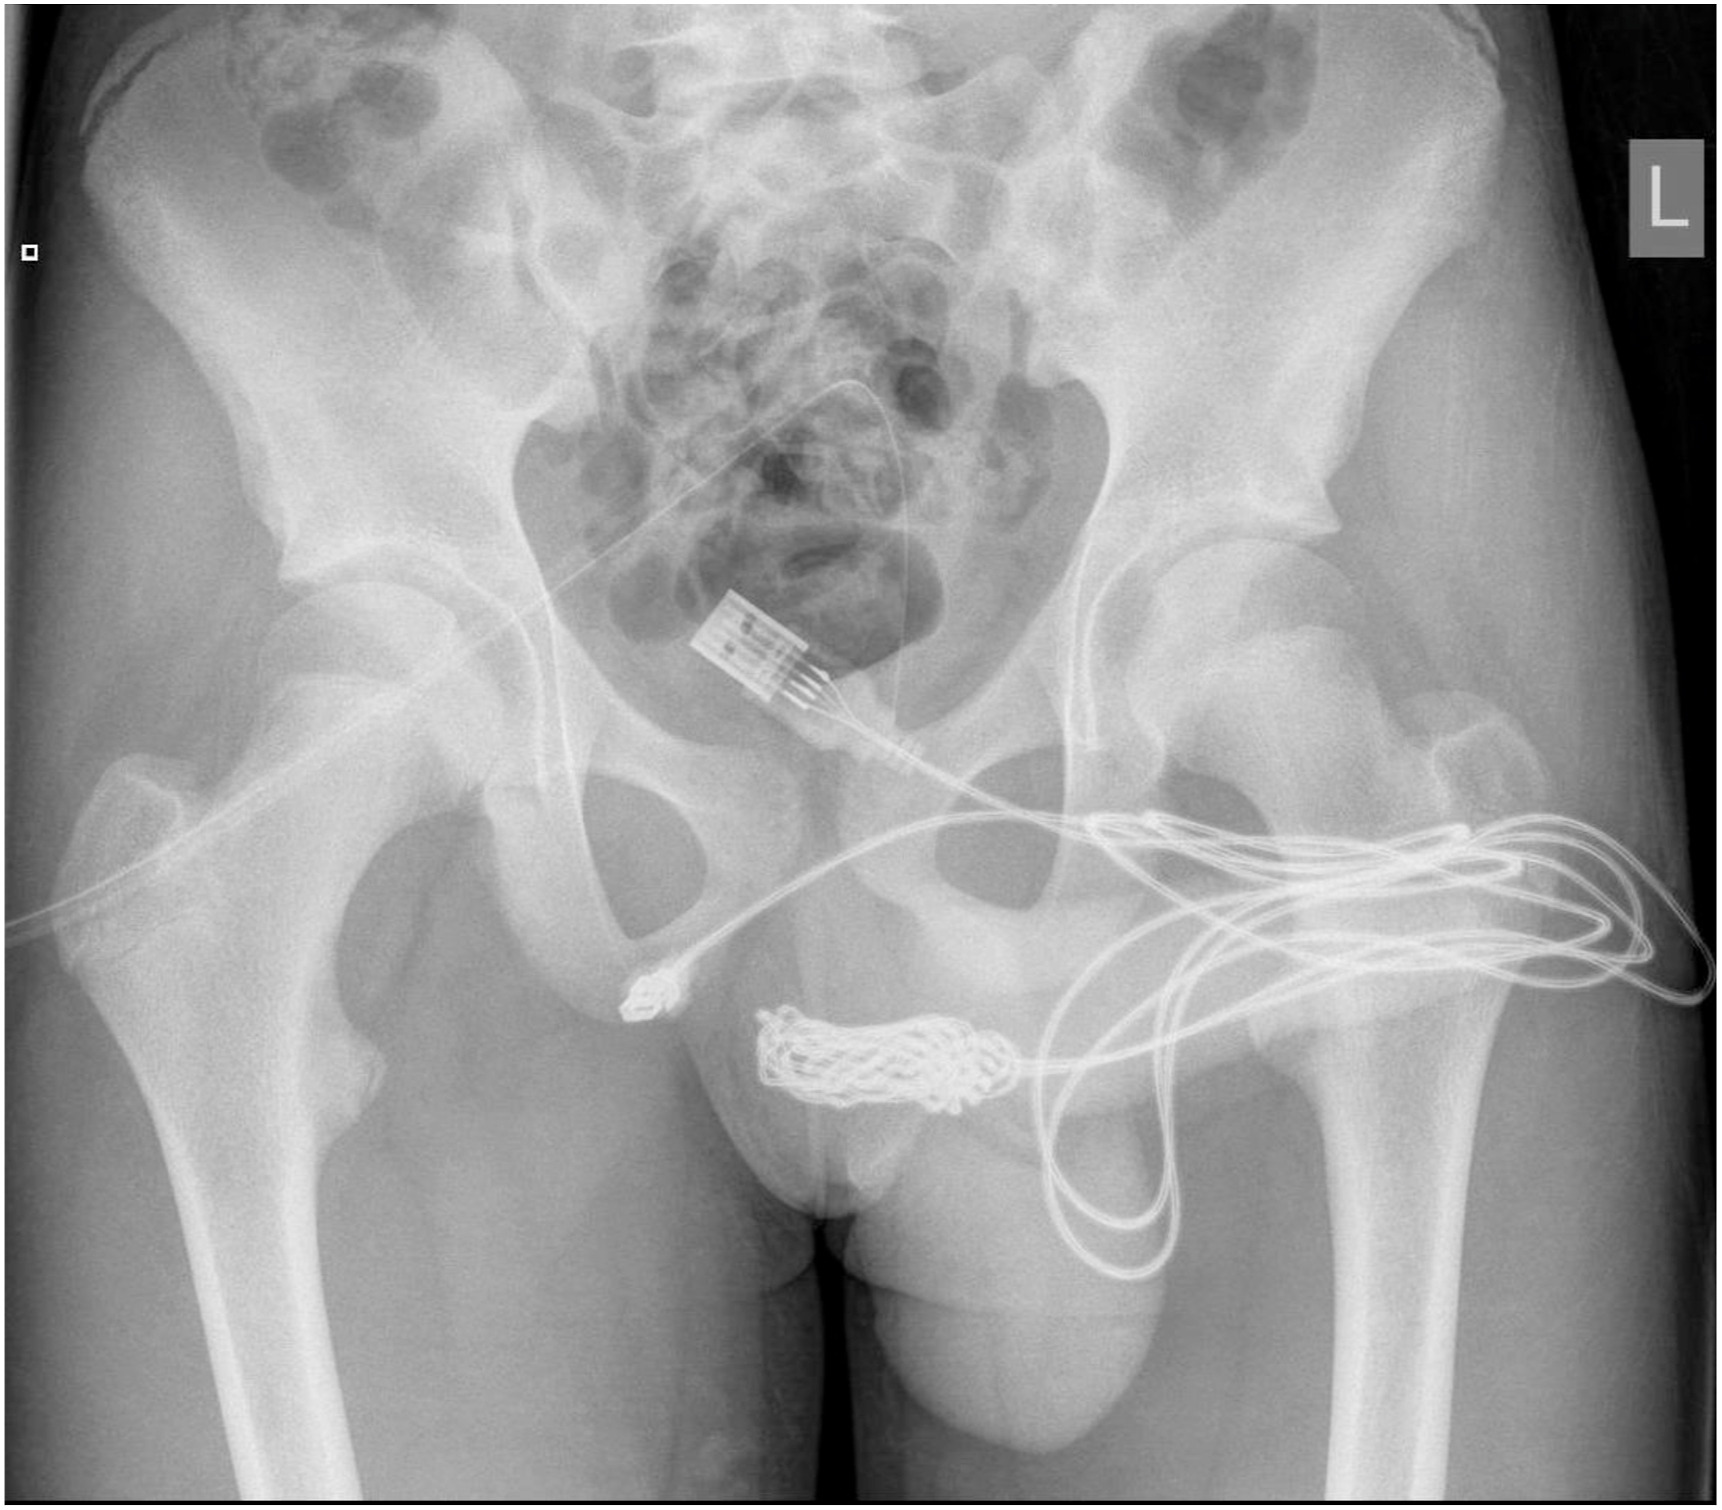 Foto rontgen yang dicantumkan dalam makalah “Urethral Self-Insertion Of A Usb Cable As Sexual Experimentation: A Case Report”.